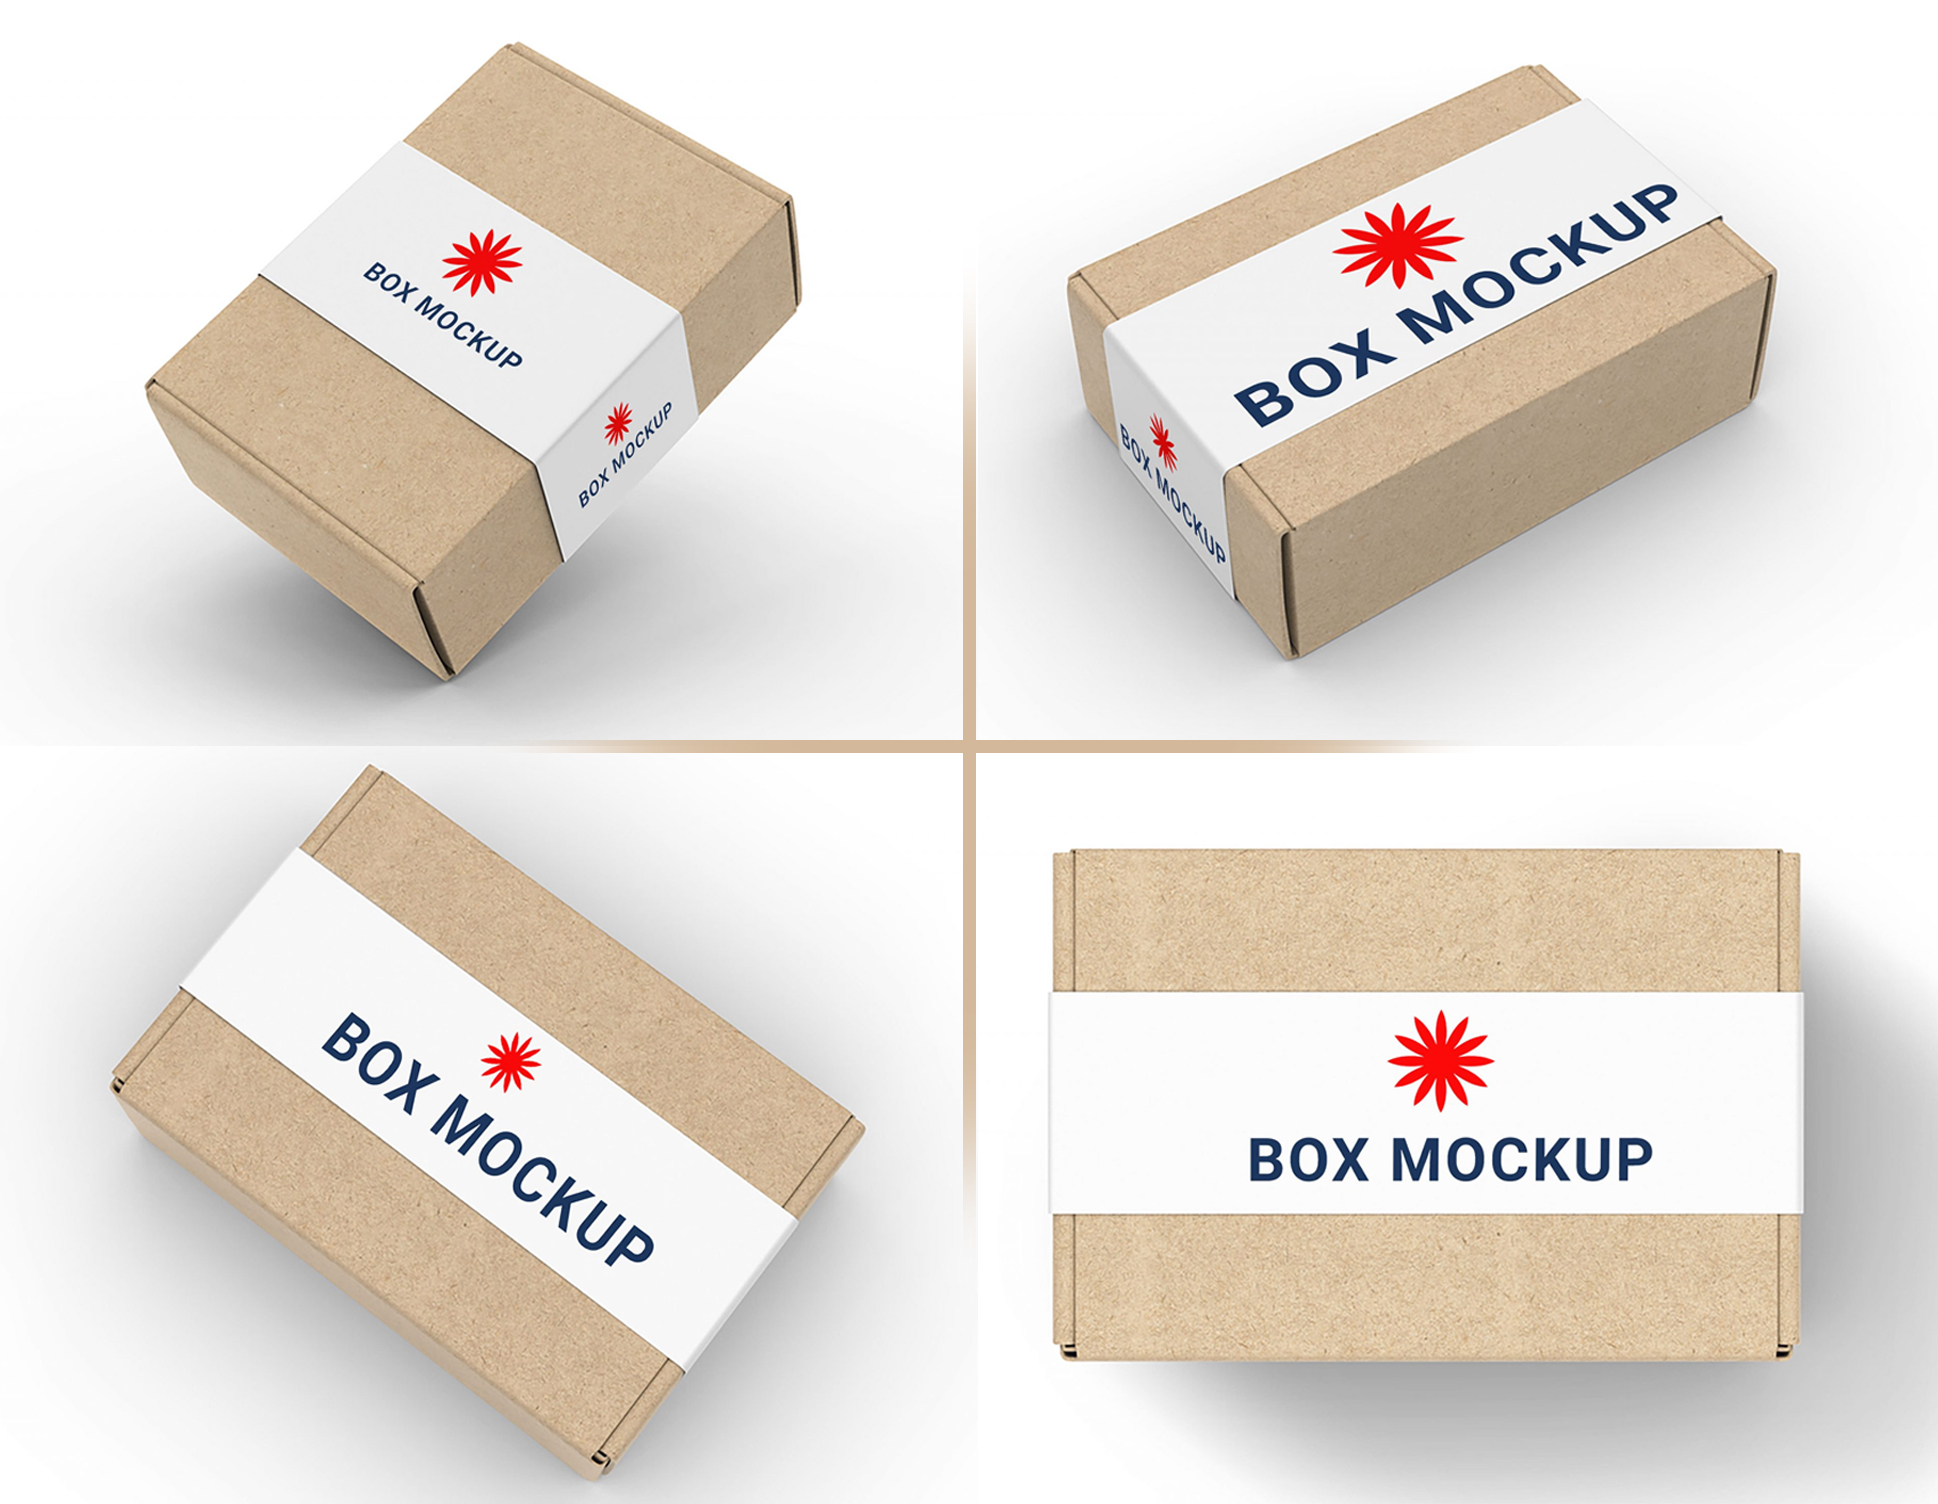 Kraft Box Packaging Mockup